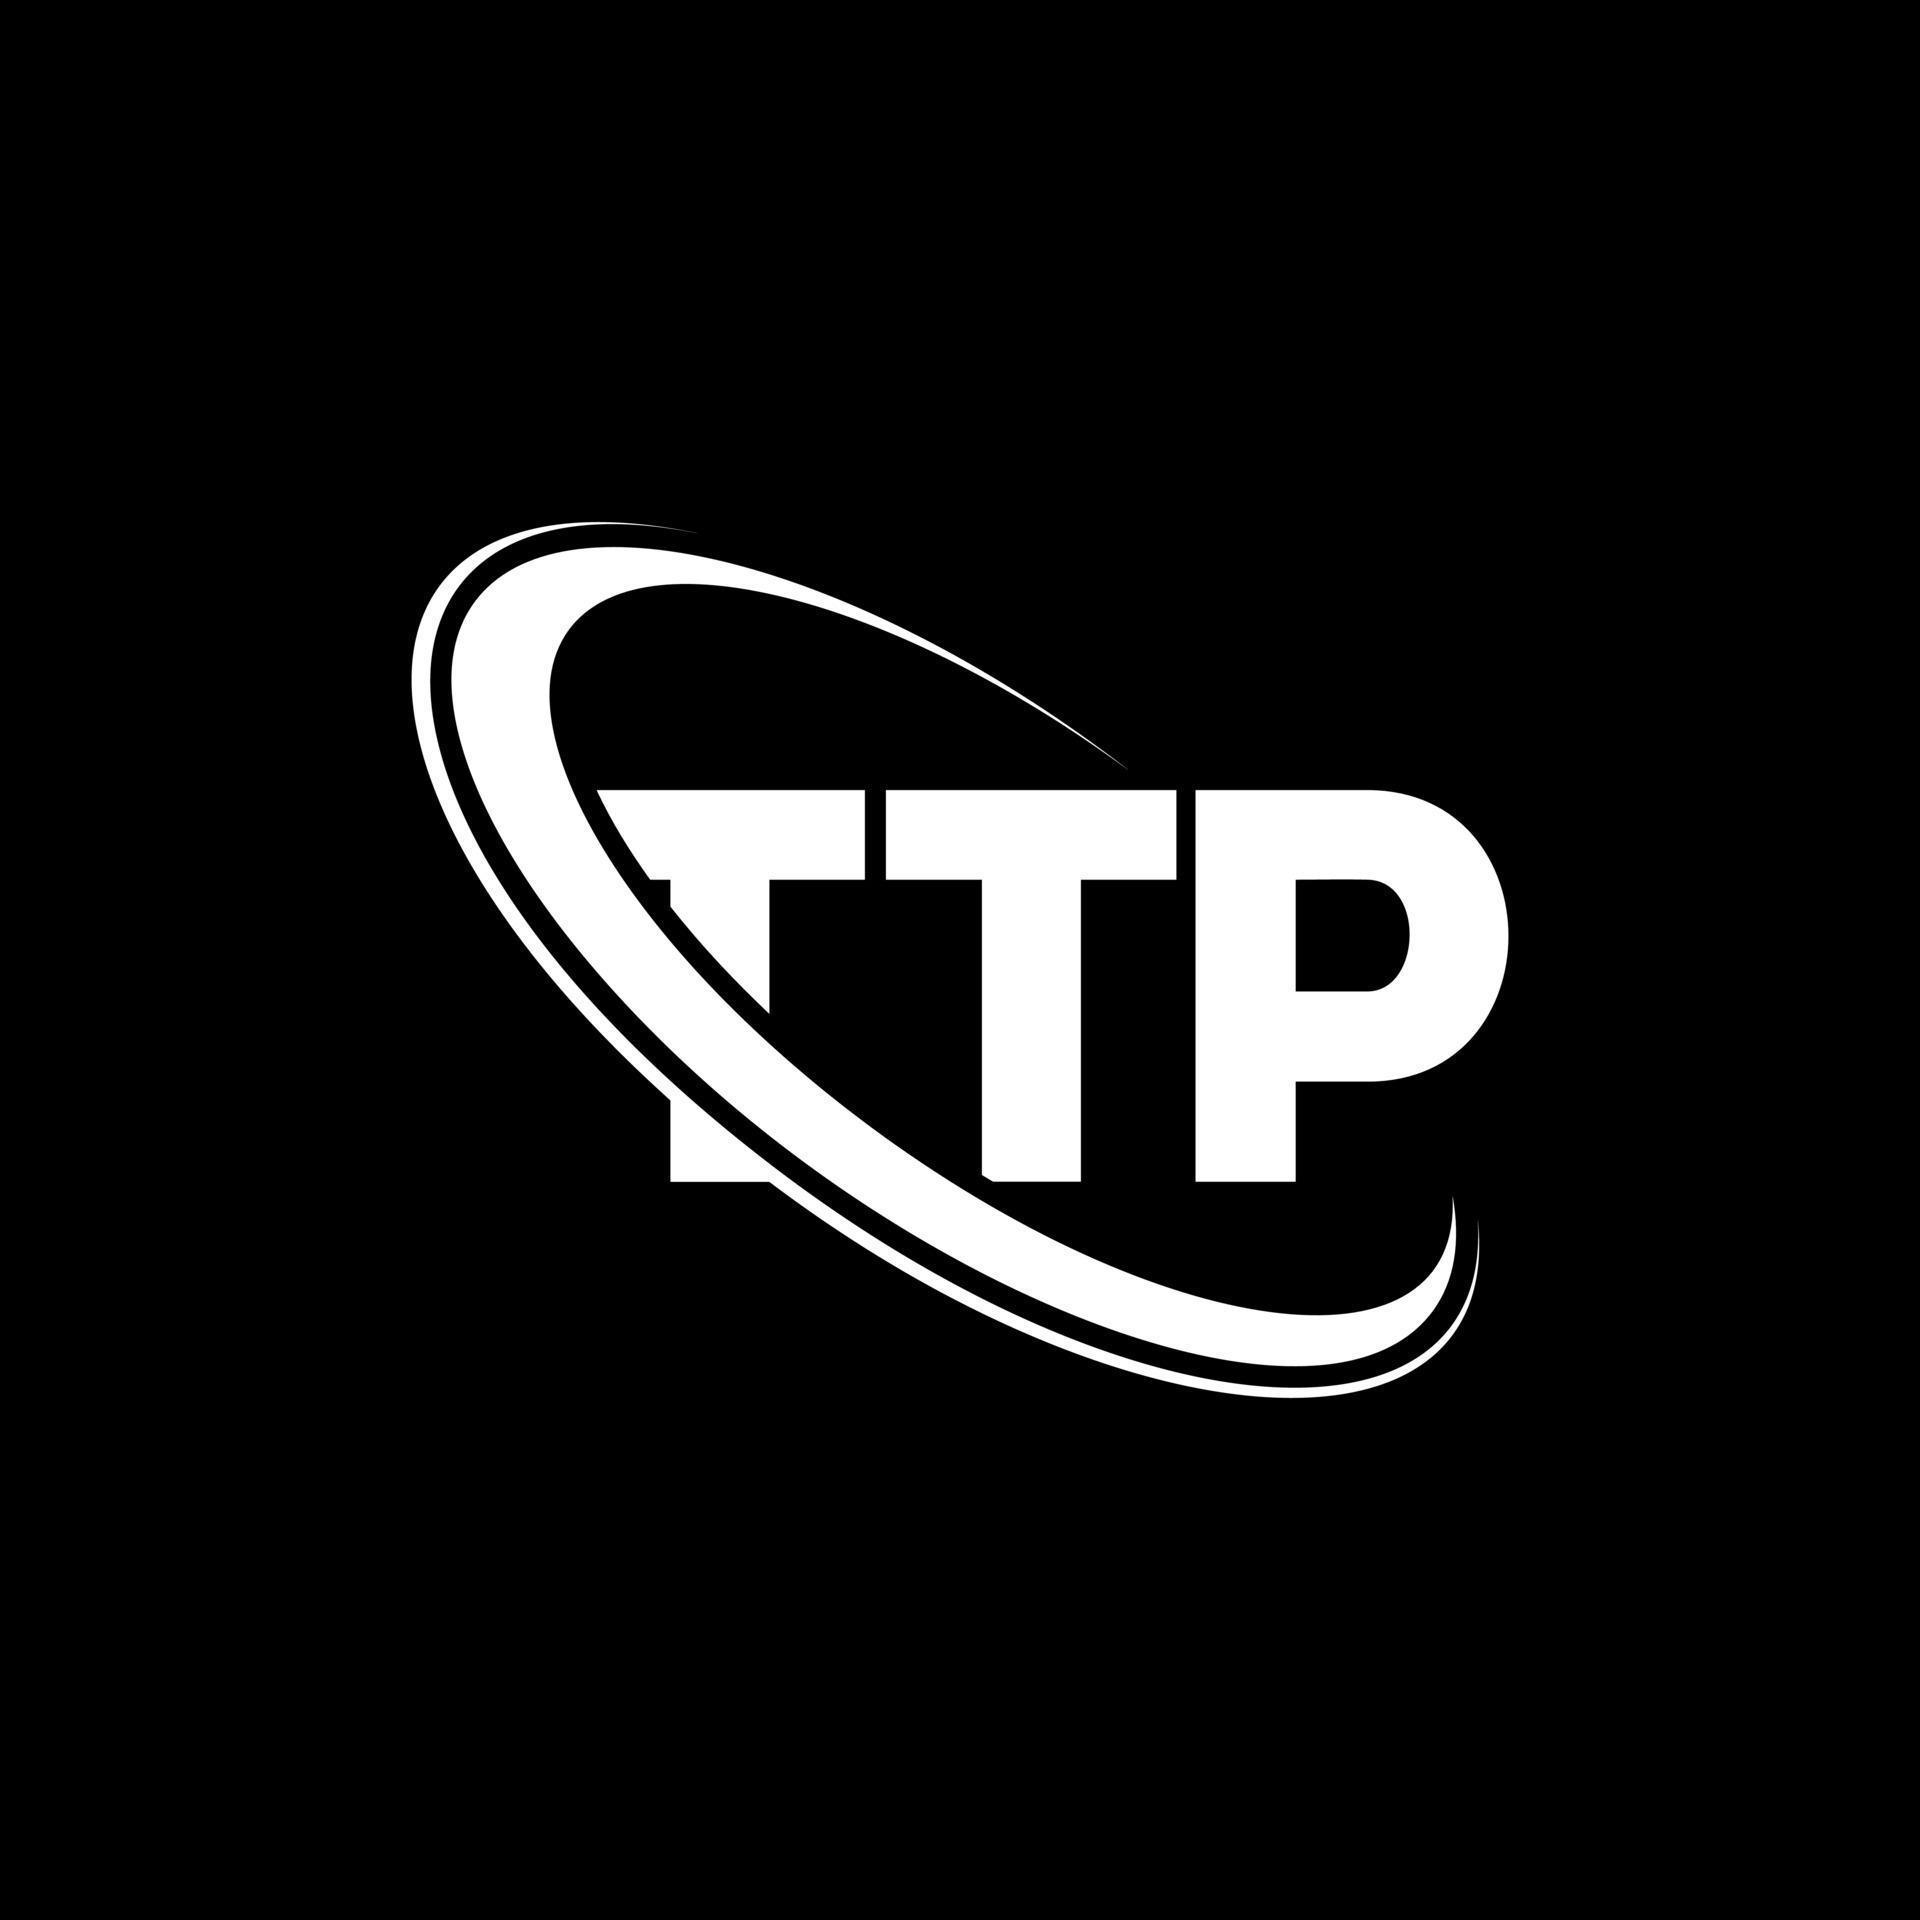 TTP logo. TTP letter. TTP letter logo design. Initials TTP logo linked ...